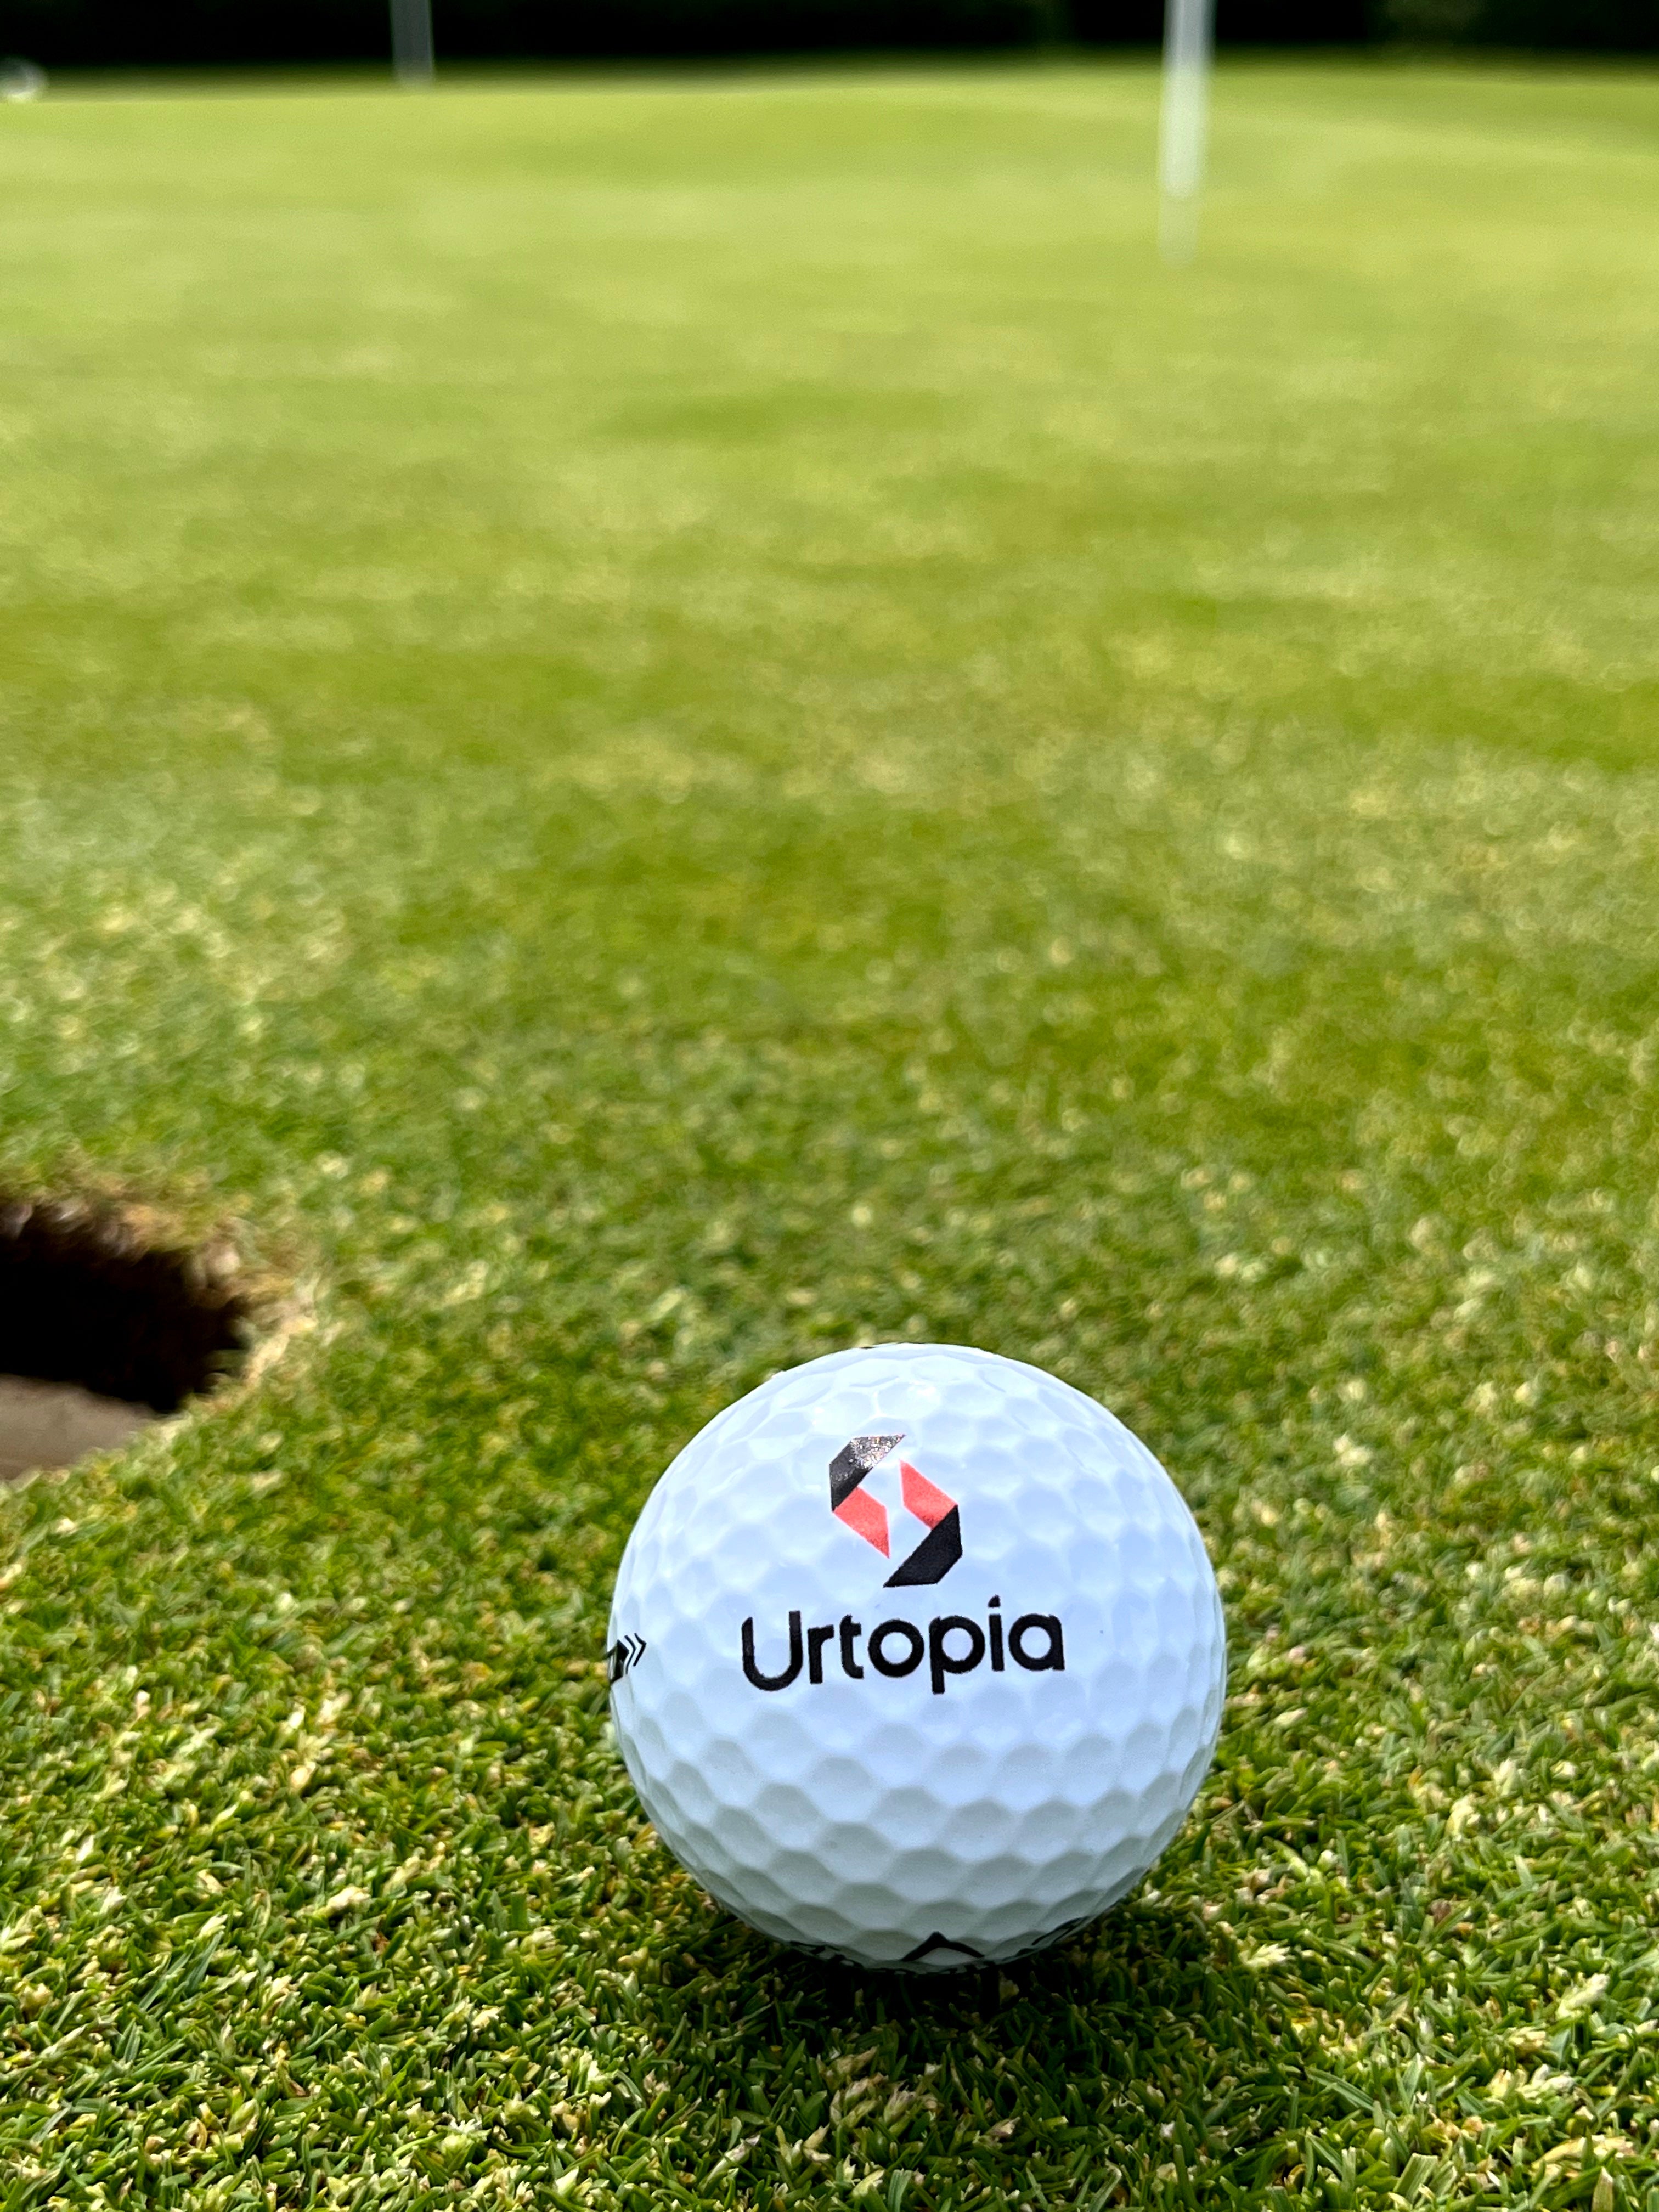 Urtopia cooperation with golf